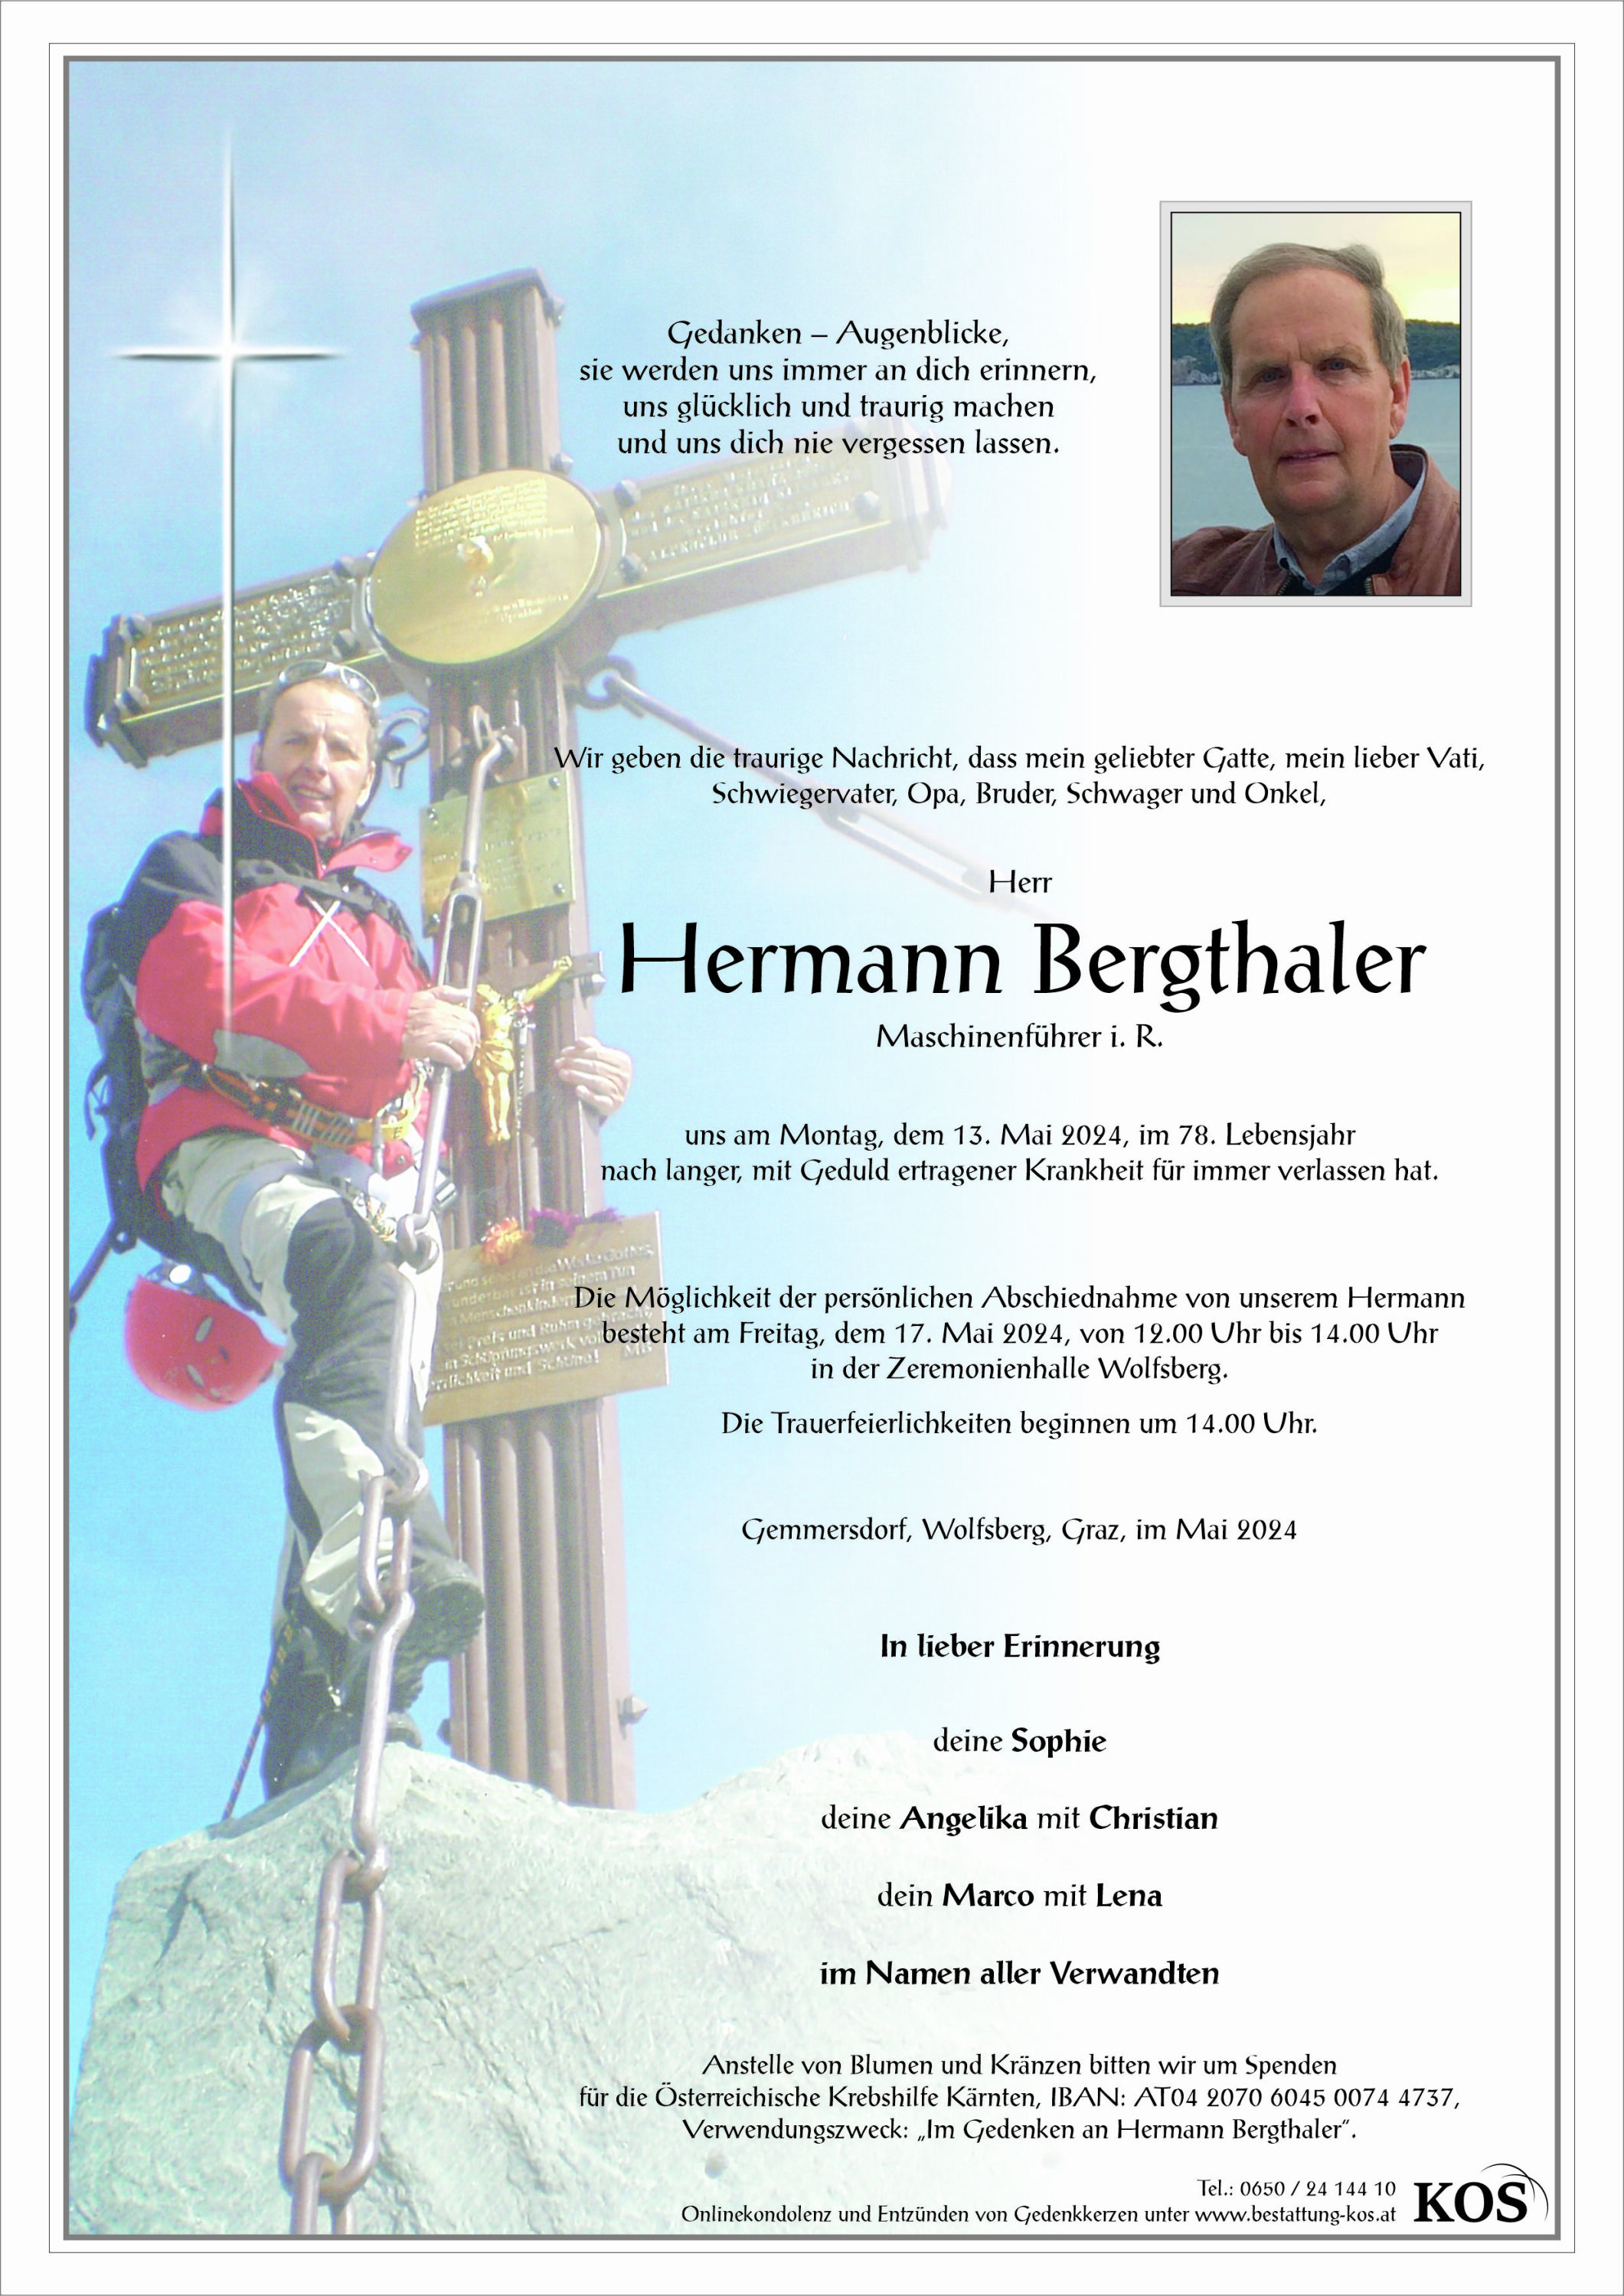 Hermann Bergthaler